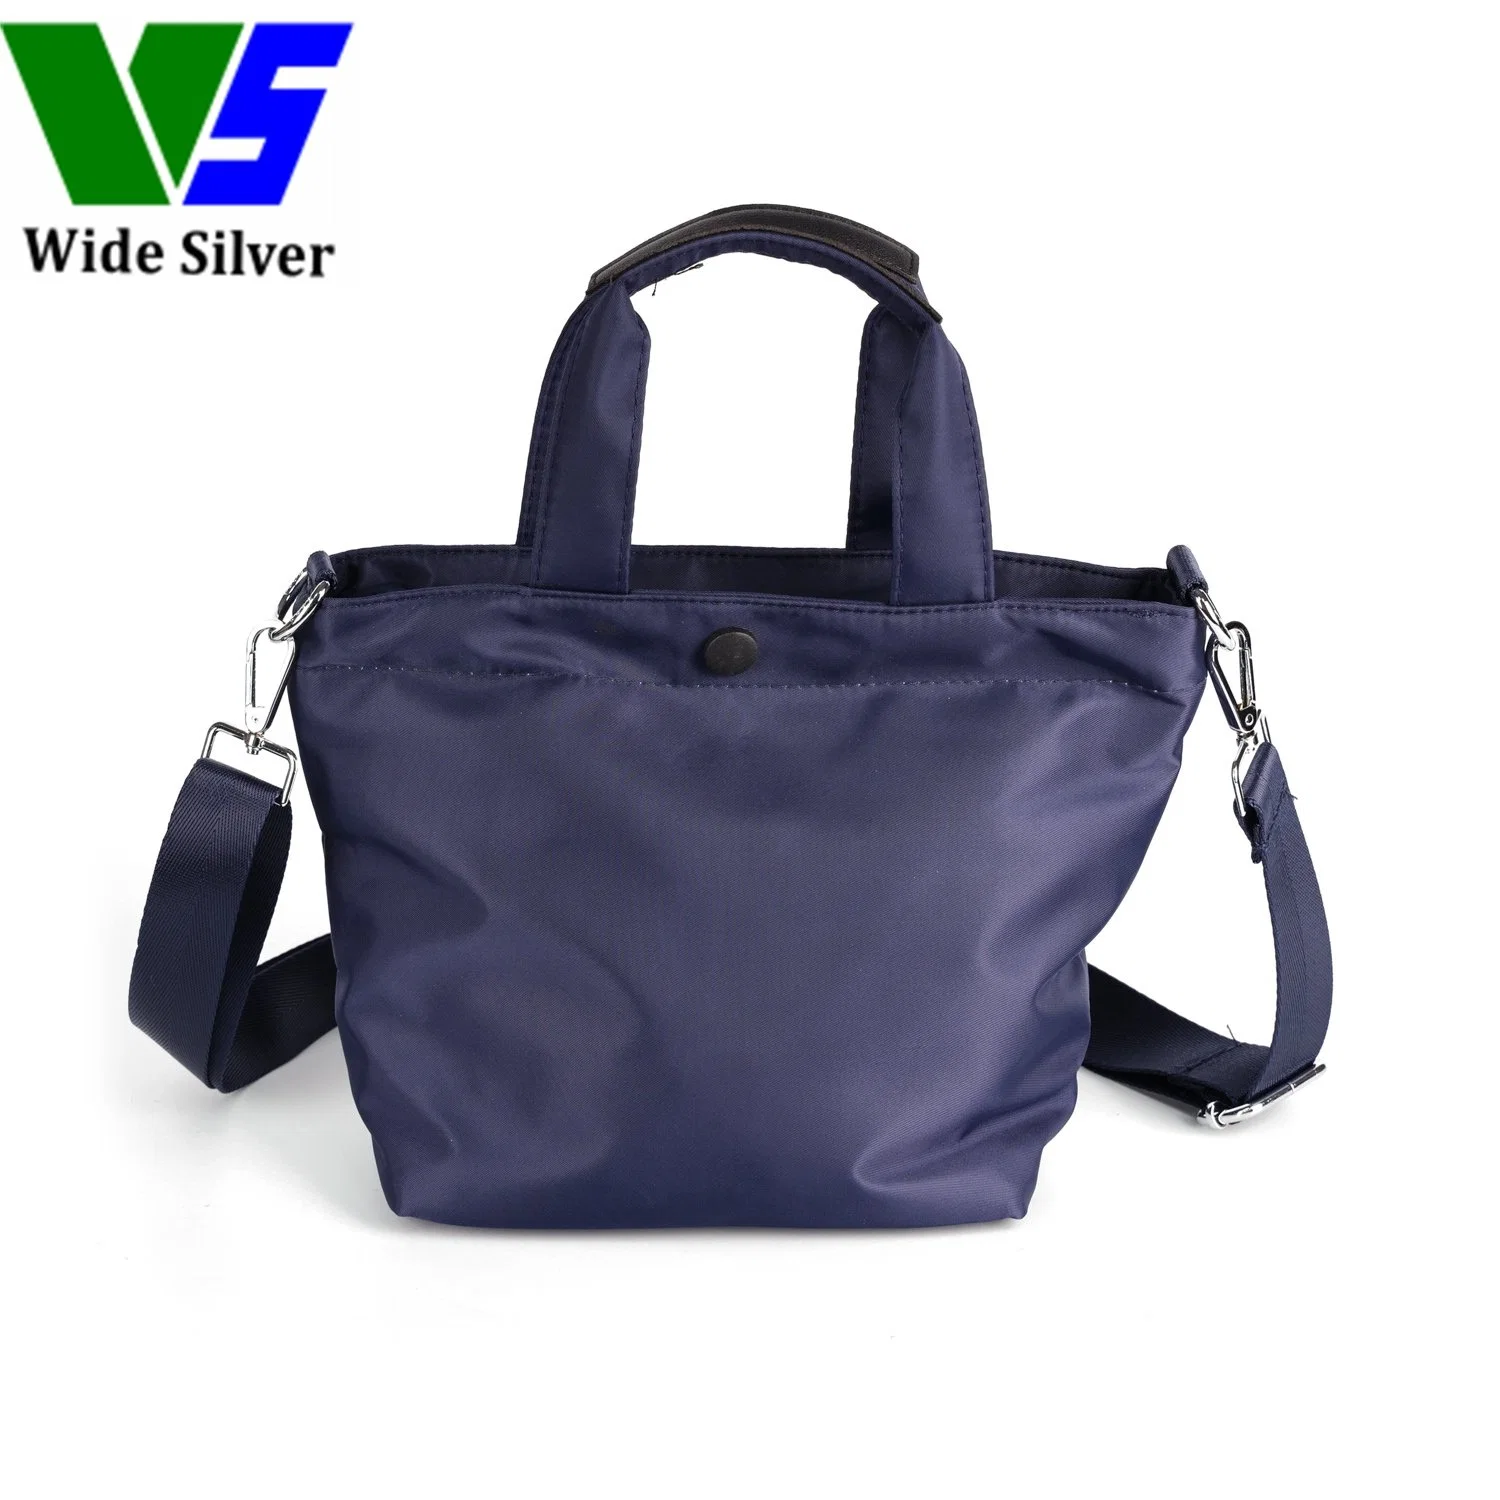 Wide Sliver Waterproof Multi Compartment Shoulder Bag Crossbody Bags for Men